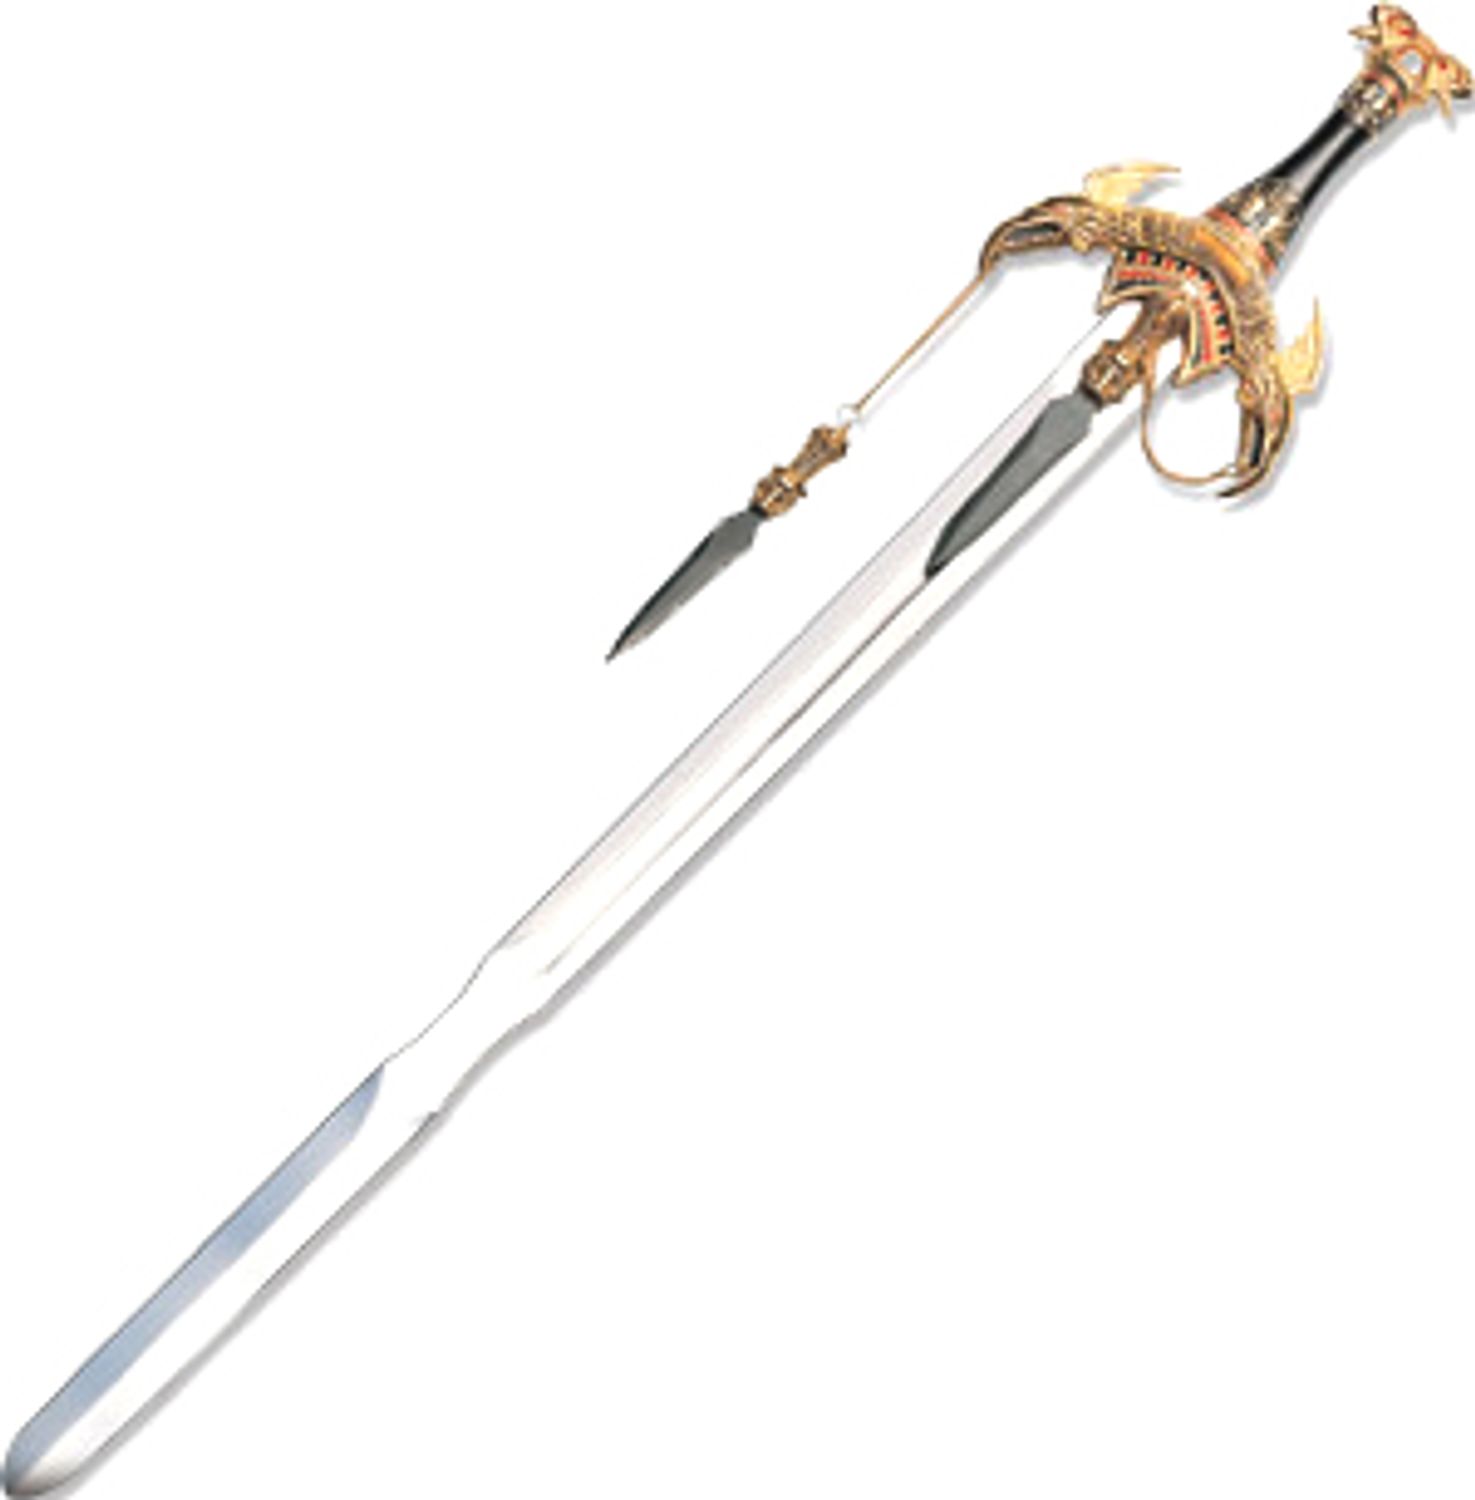 fantasy sword hilts